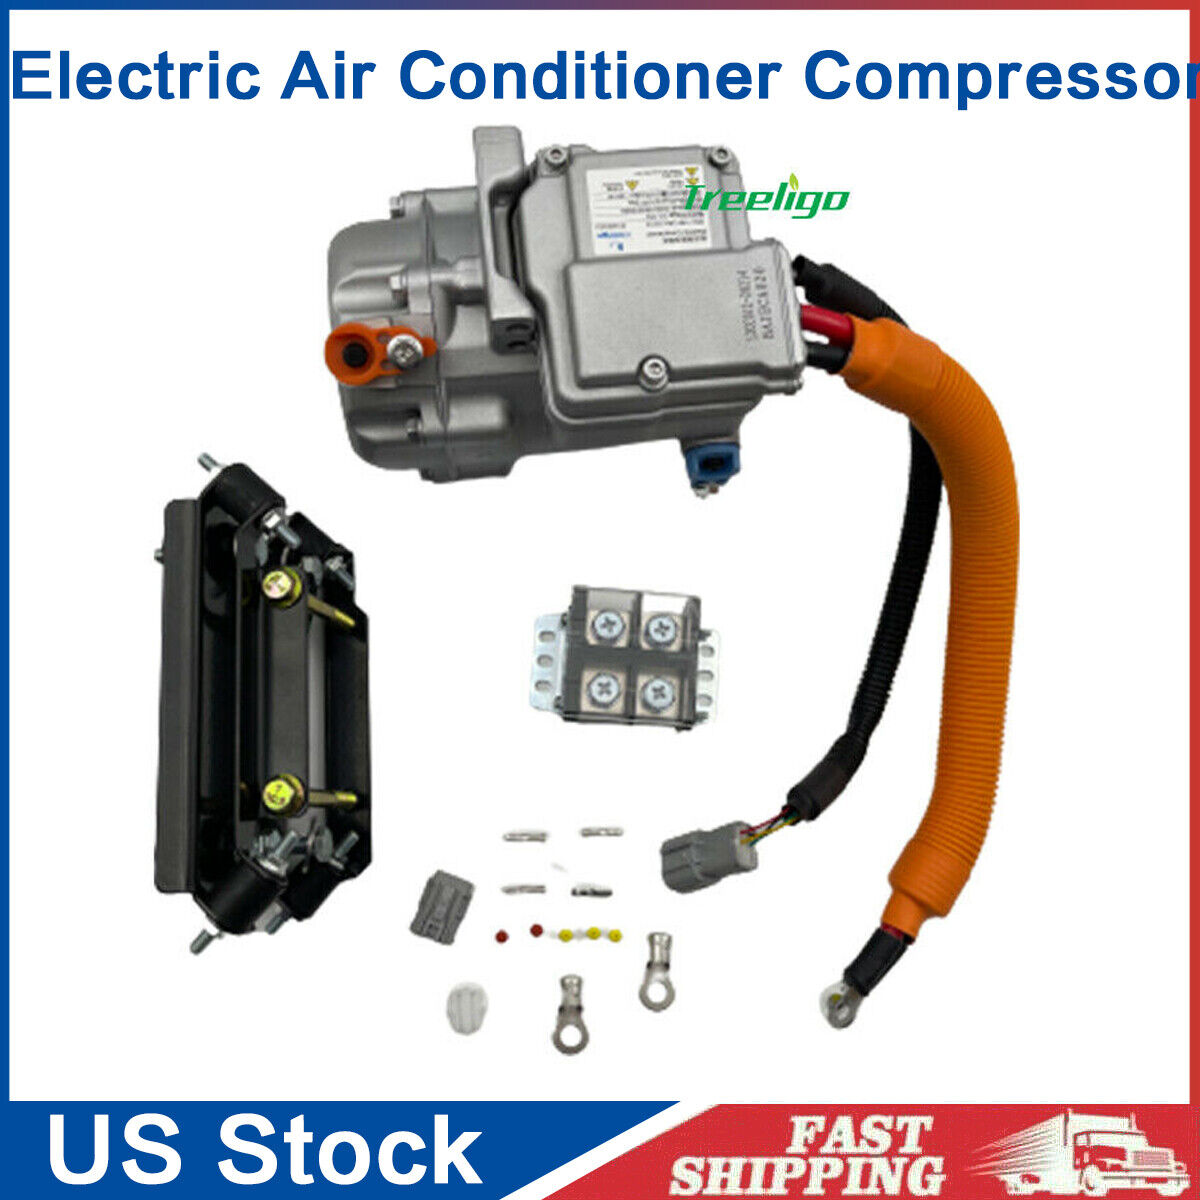 A/C 12V 14CC Electric Compressor Set for Auto DC Air Conditioning Car Truck Bus